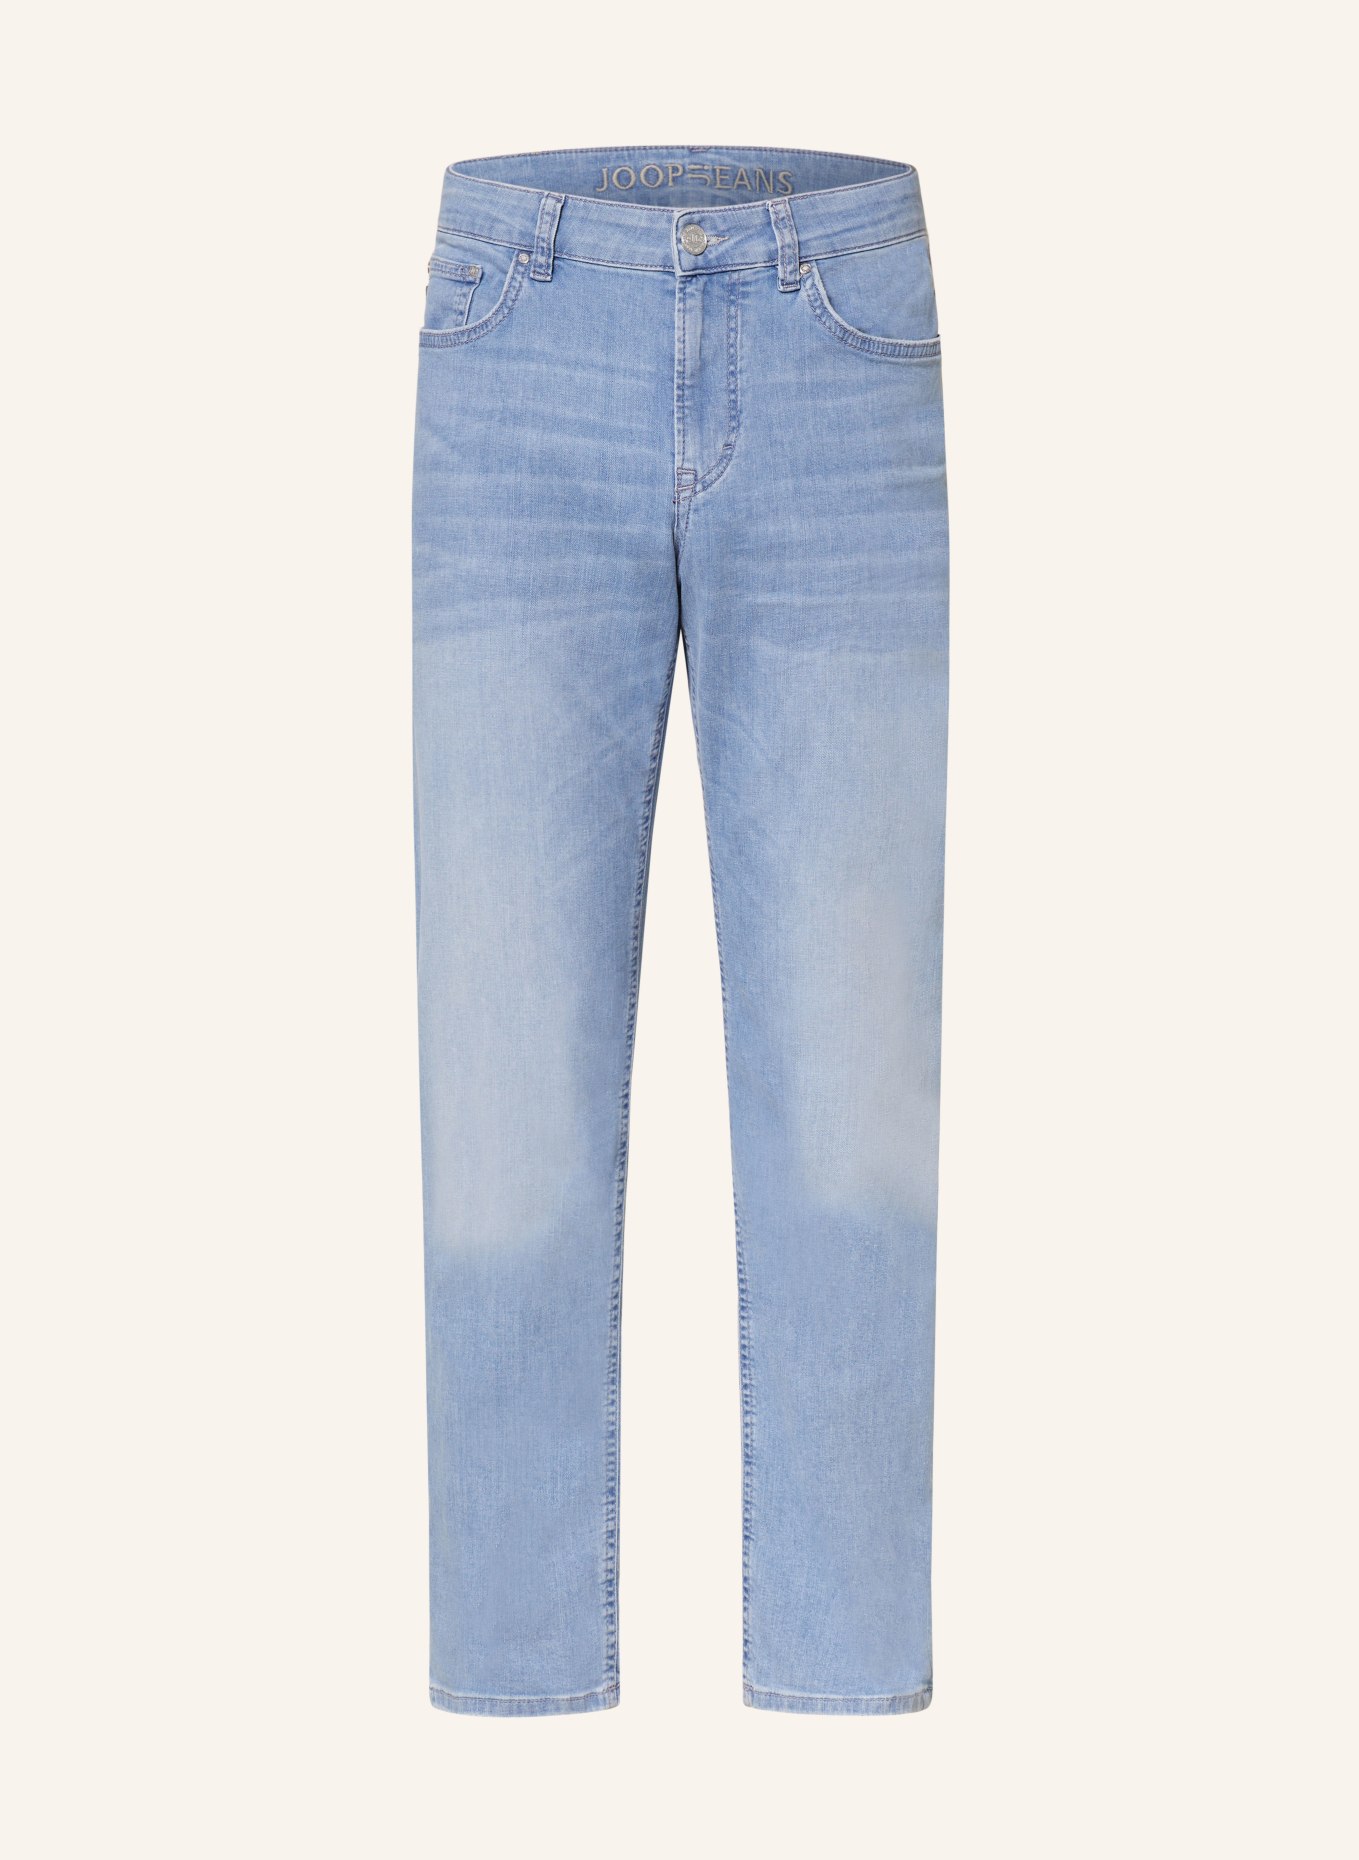 JOOP! JEANS Jeans MITCH modern fit, Color: 445 TurquoiseAqua              445 (Image 1)